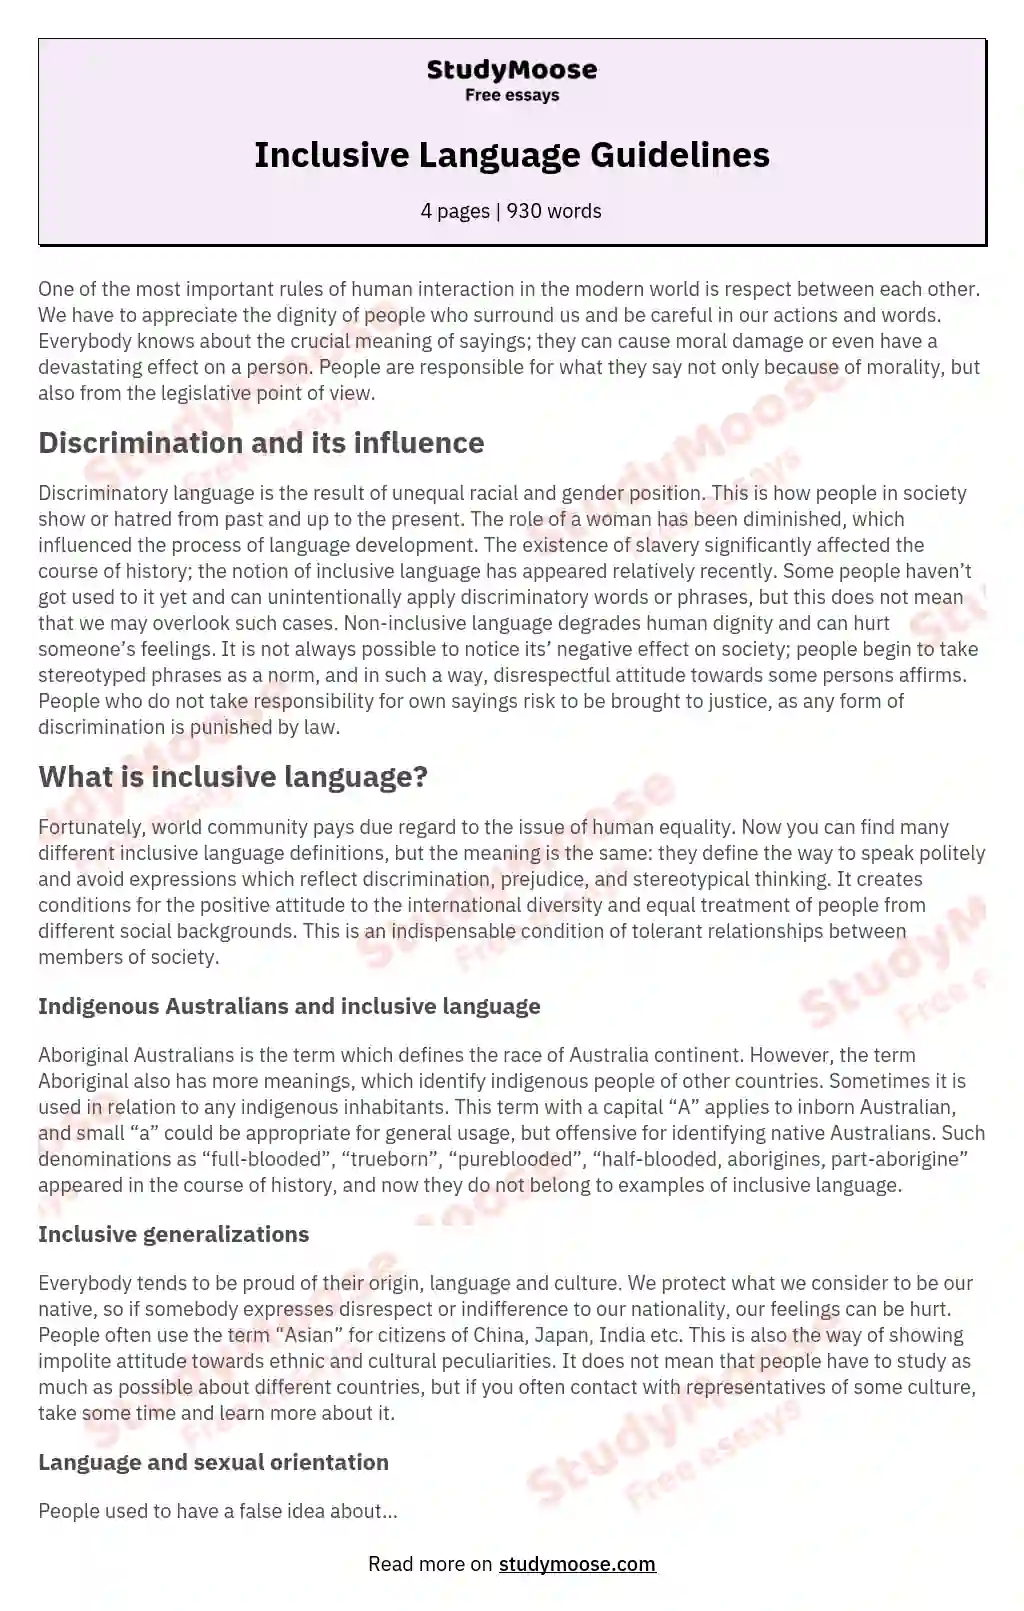 Inclusive Language Guidelines essay